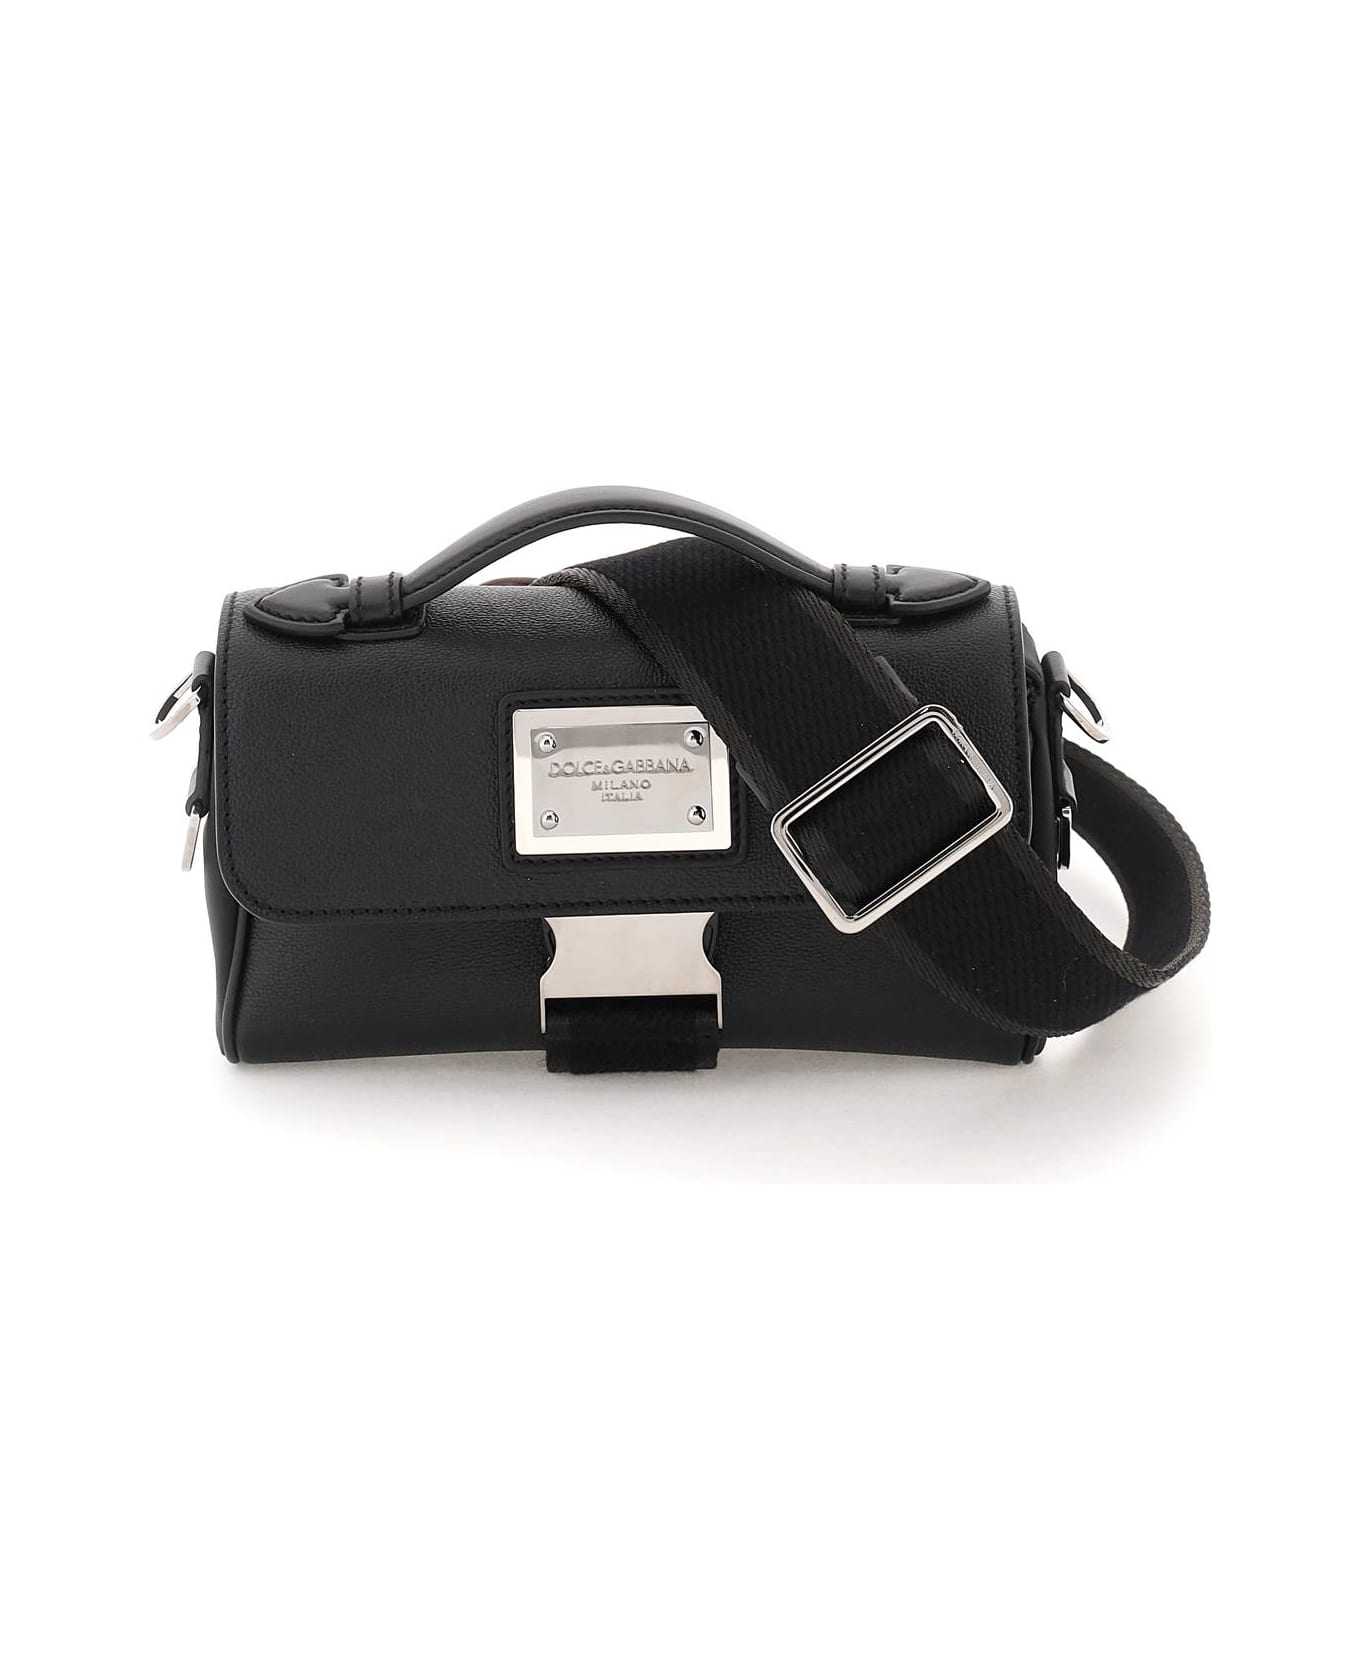 Dolce & Gabbana Handbag - NERO NERO (Black) トートバッグ